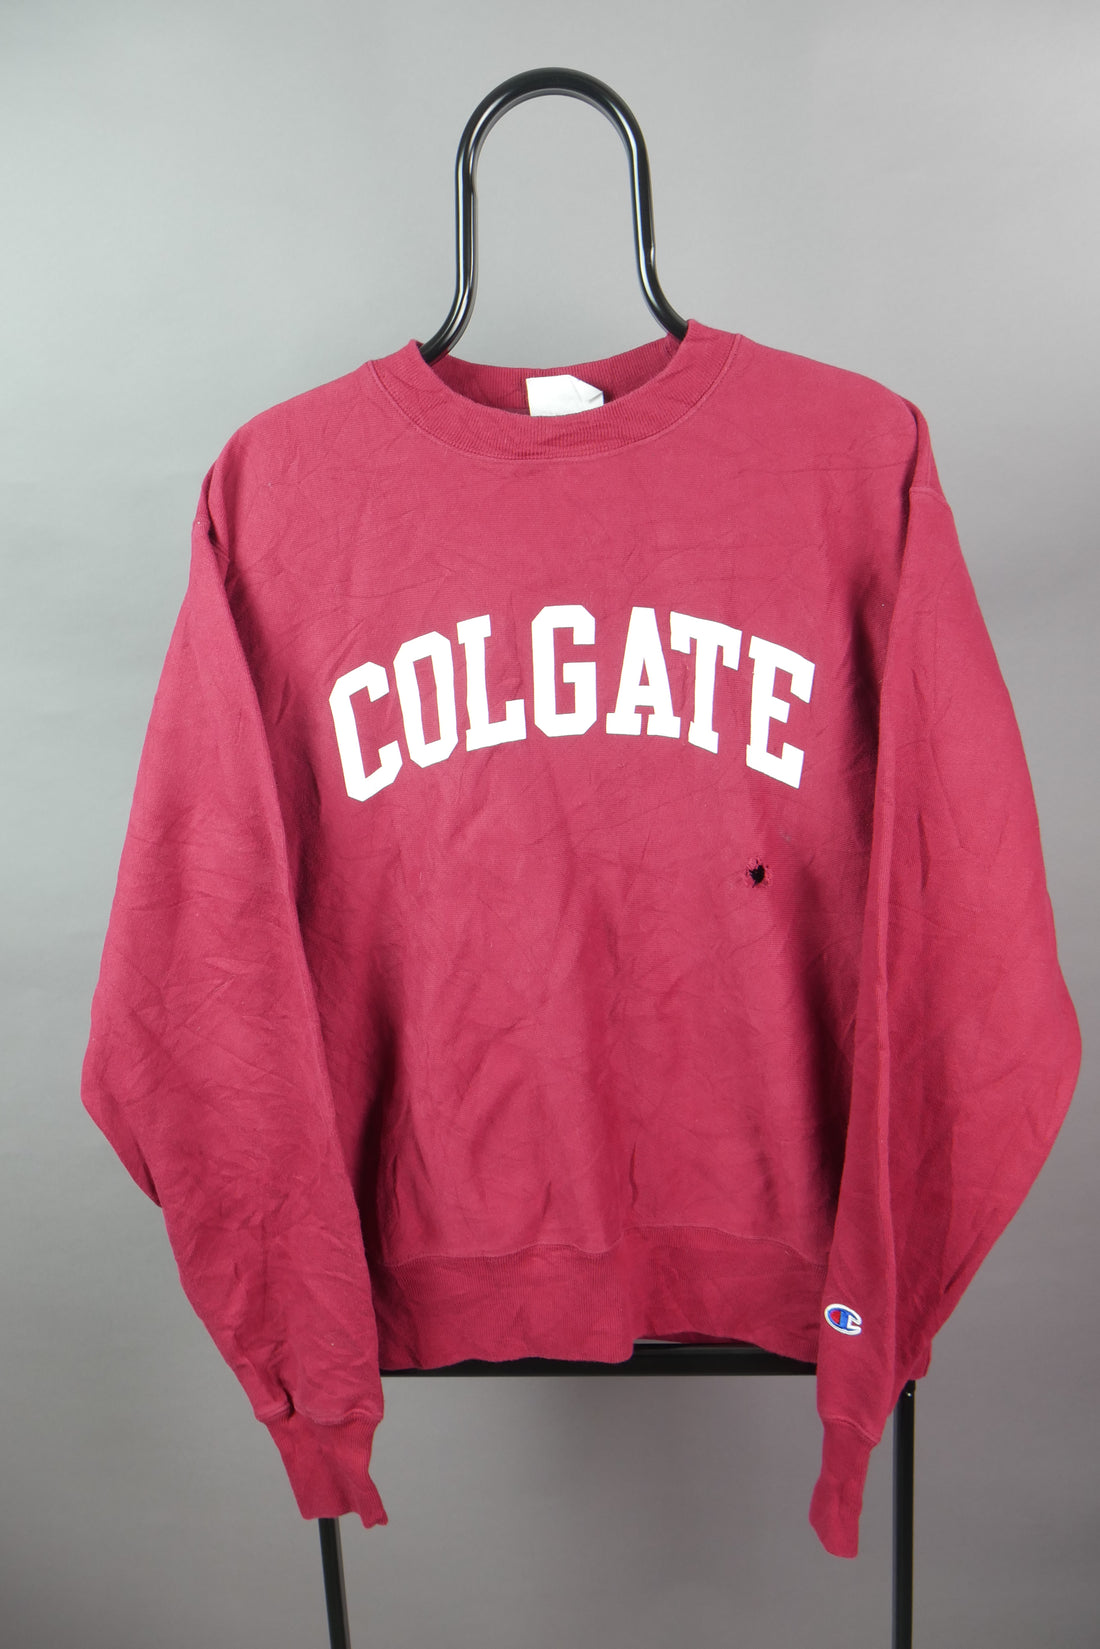 The Champion Colgate Graphic Sweatshirt (M)